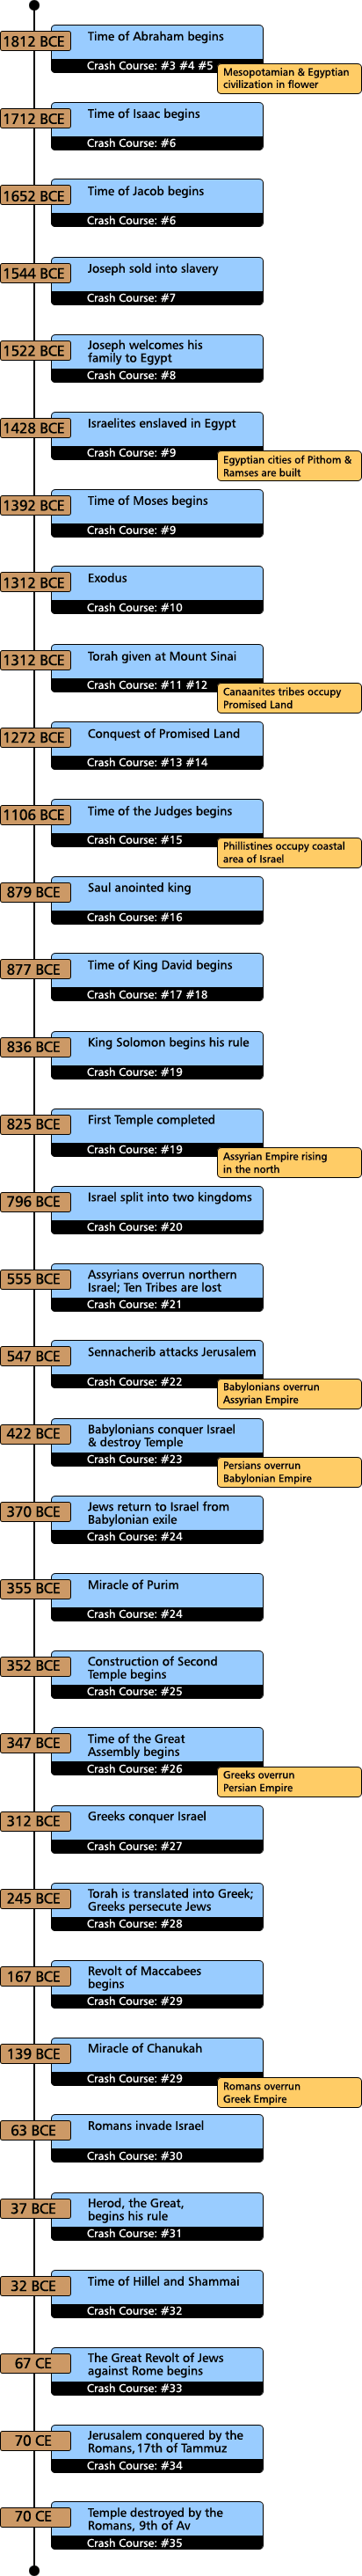 Jewish History Timeline Chart